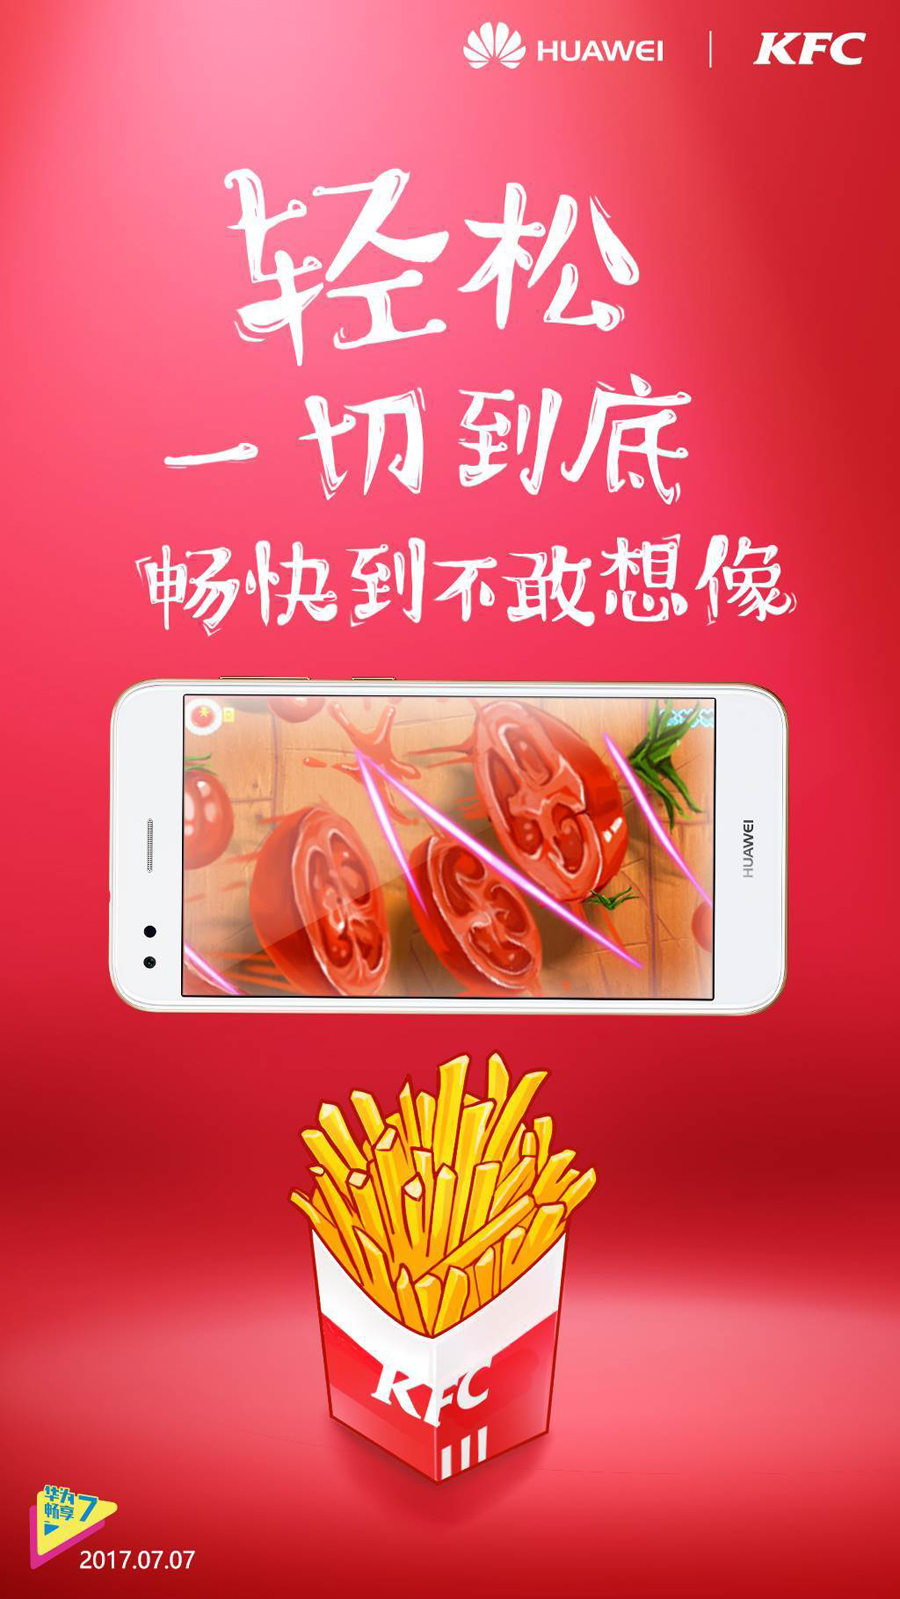 Limited Edition KFC Huawei 7 Plus, KFC, KFC Smartphone, KFC Huawei 7 Plus, KFC x Huawei 7 Plus, Huawei 